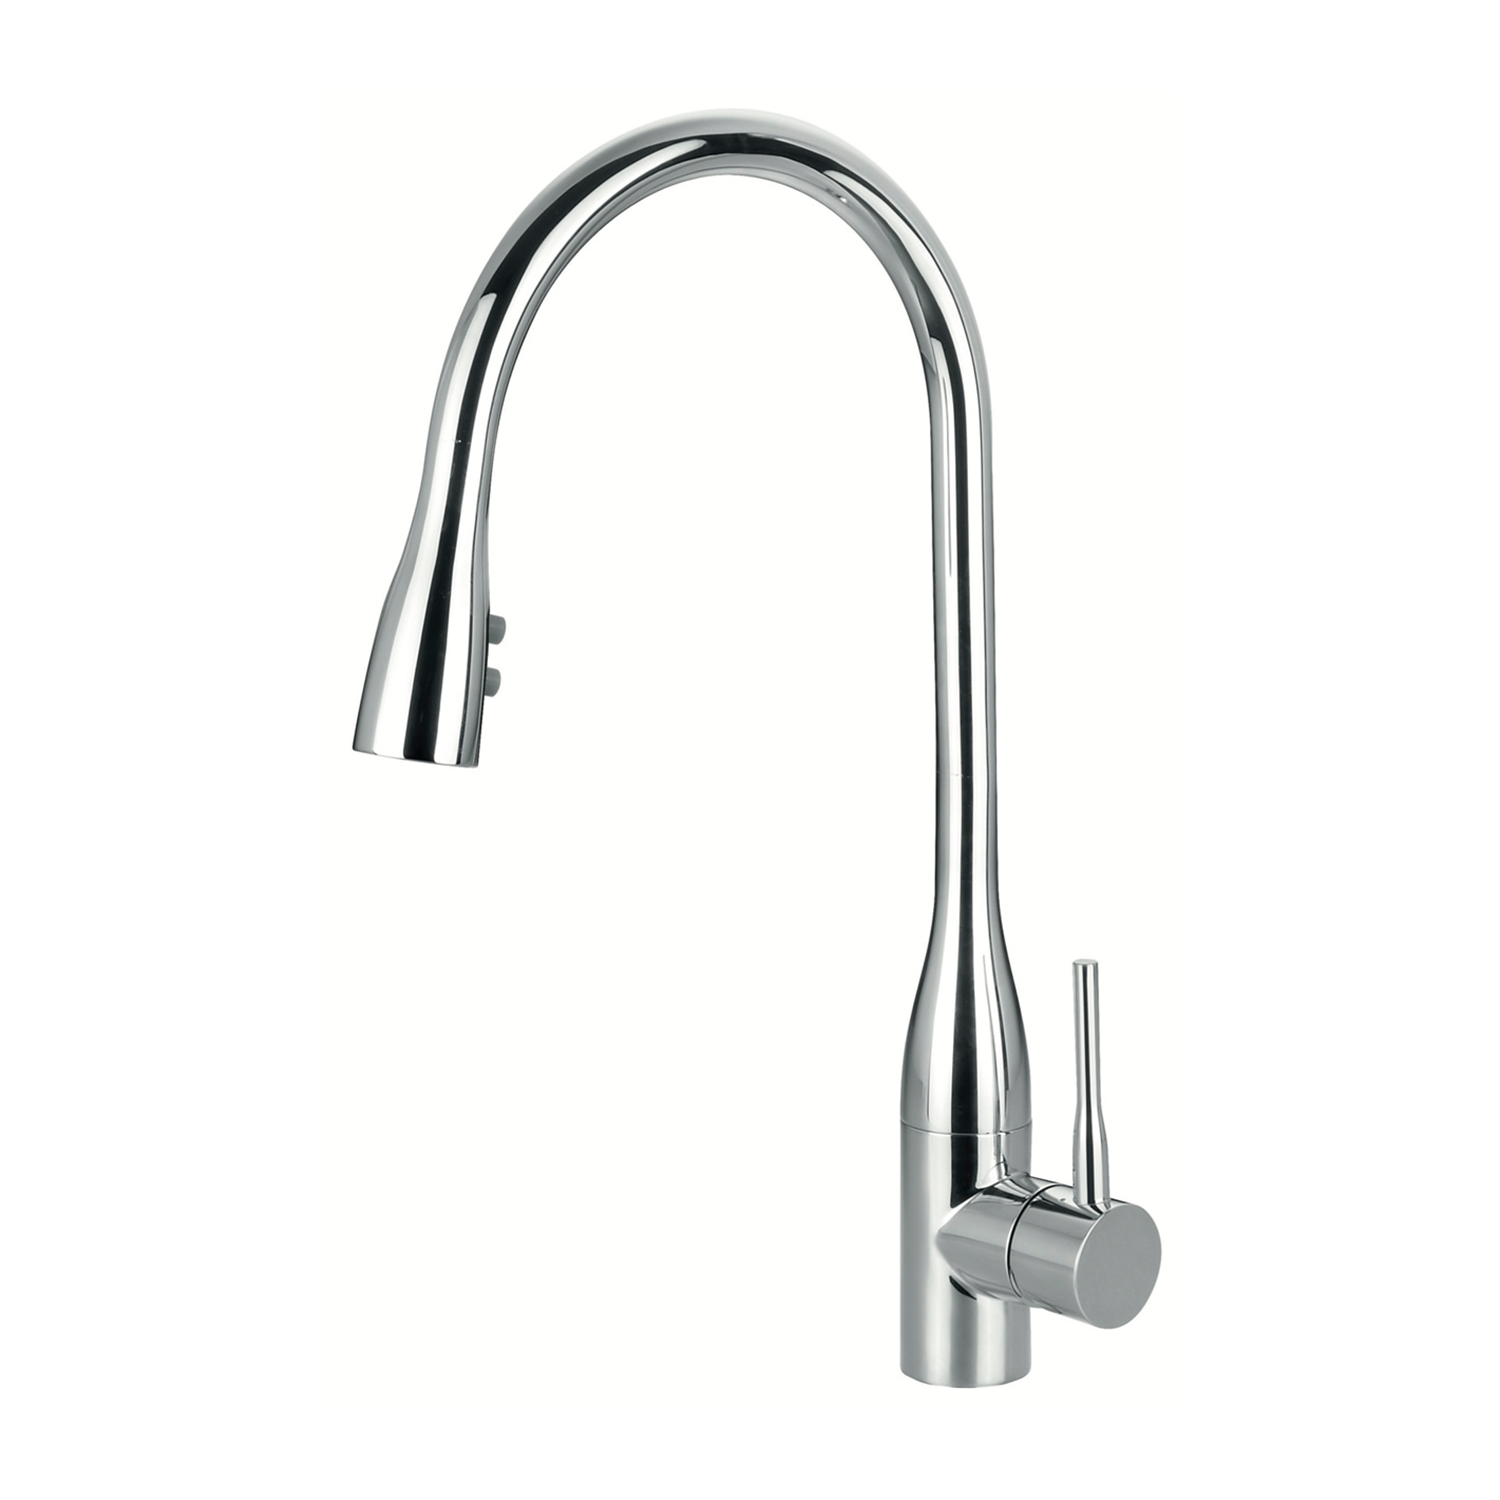 DAX Modern Single Handle Kitchen Faucet, Dual Sprayer, Brass Body, Chrome Finish, Size 8-11/16 x 16-9/16 Inches (DAX-8763)